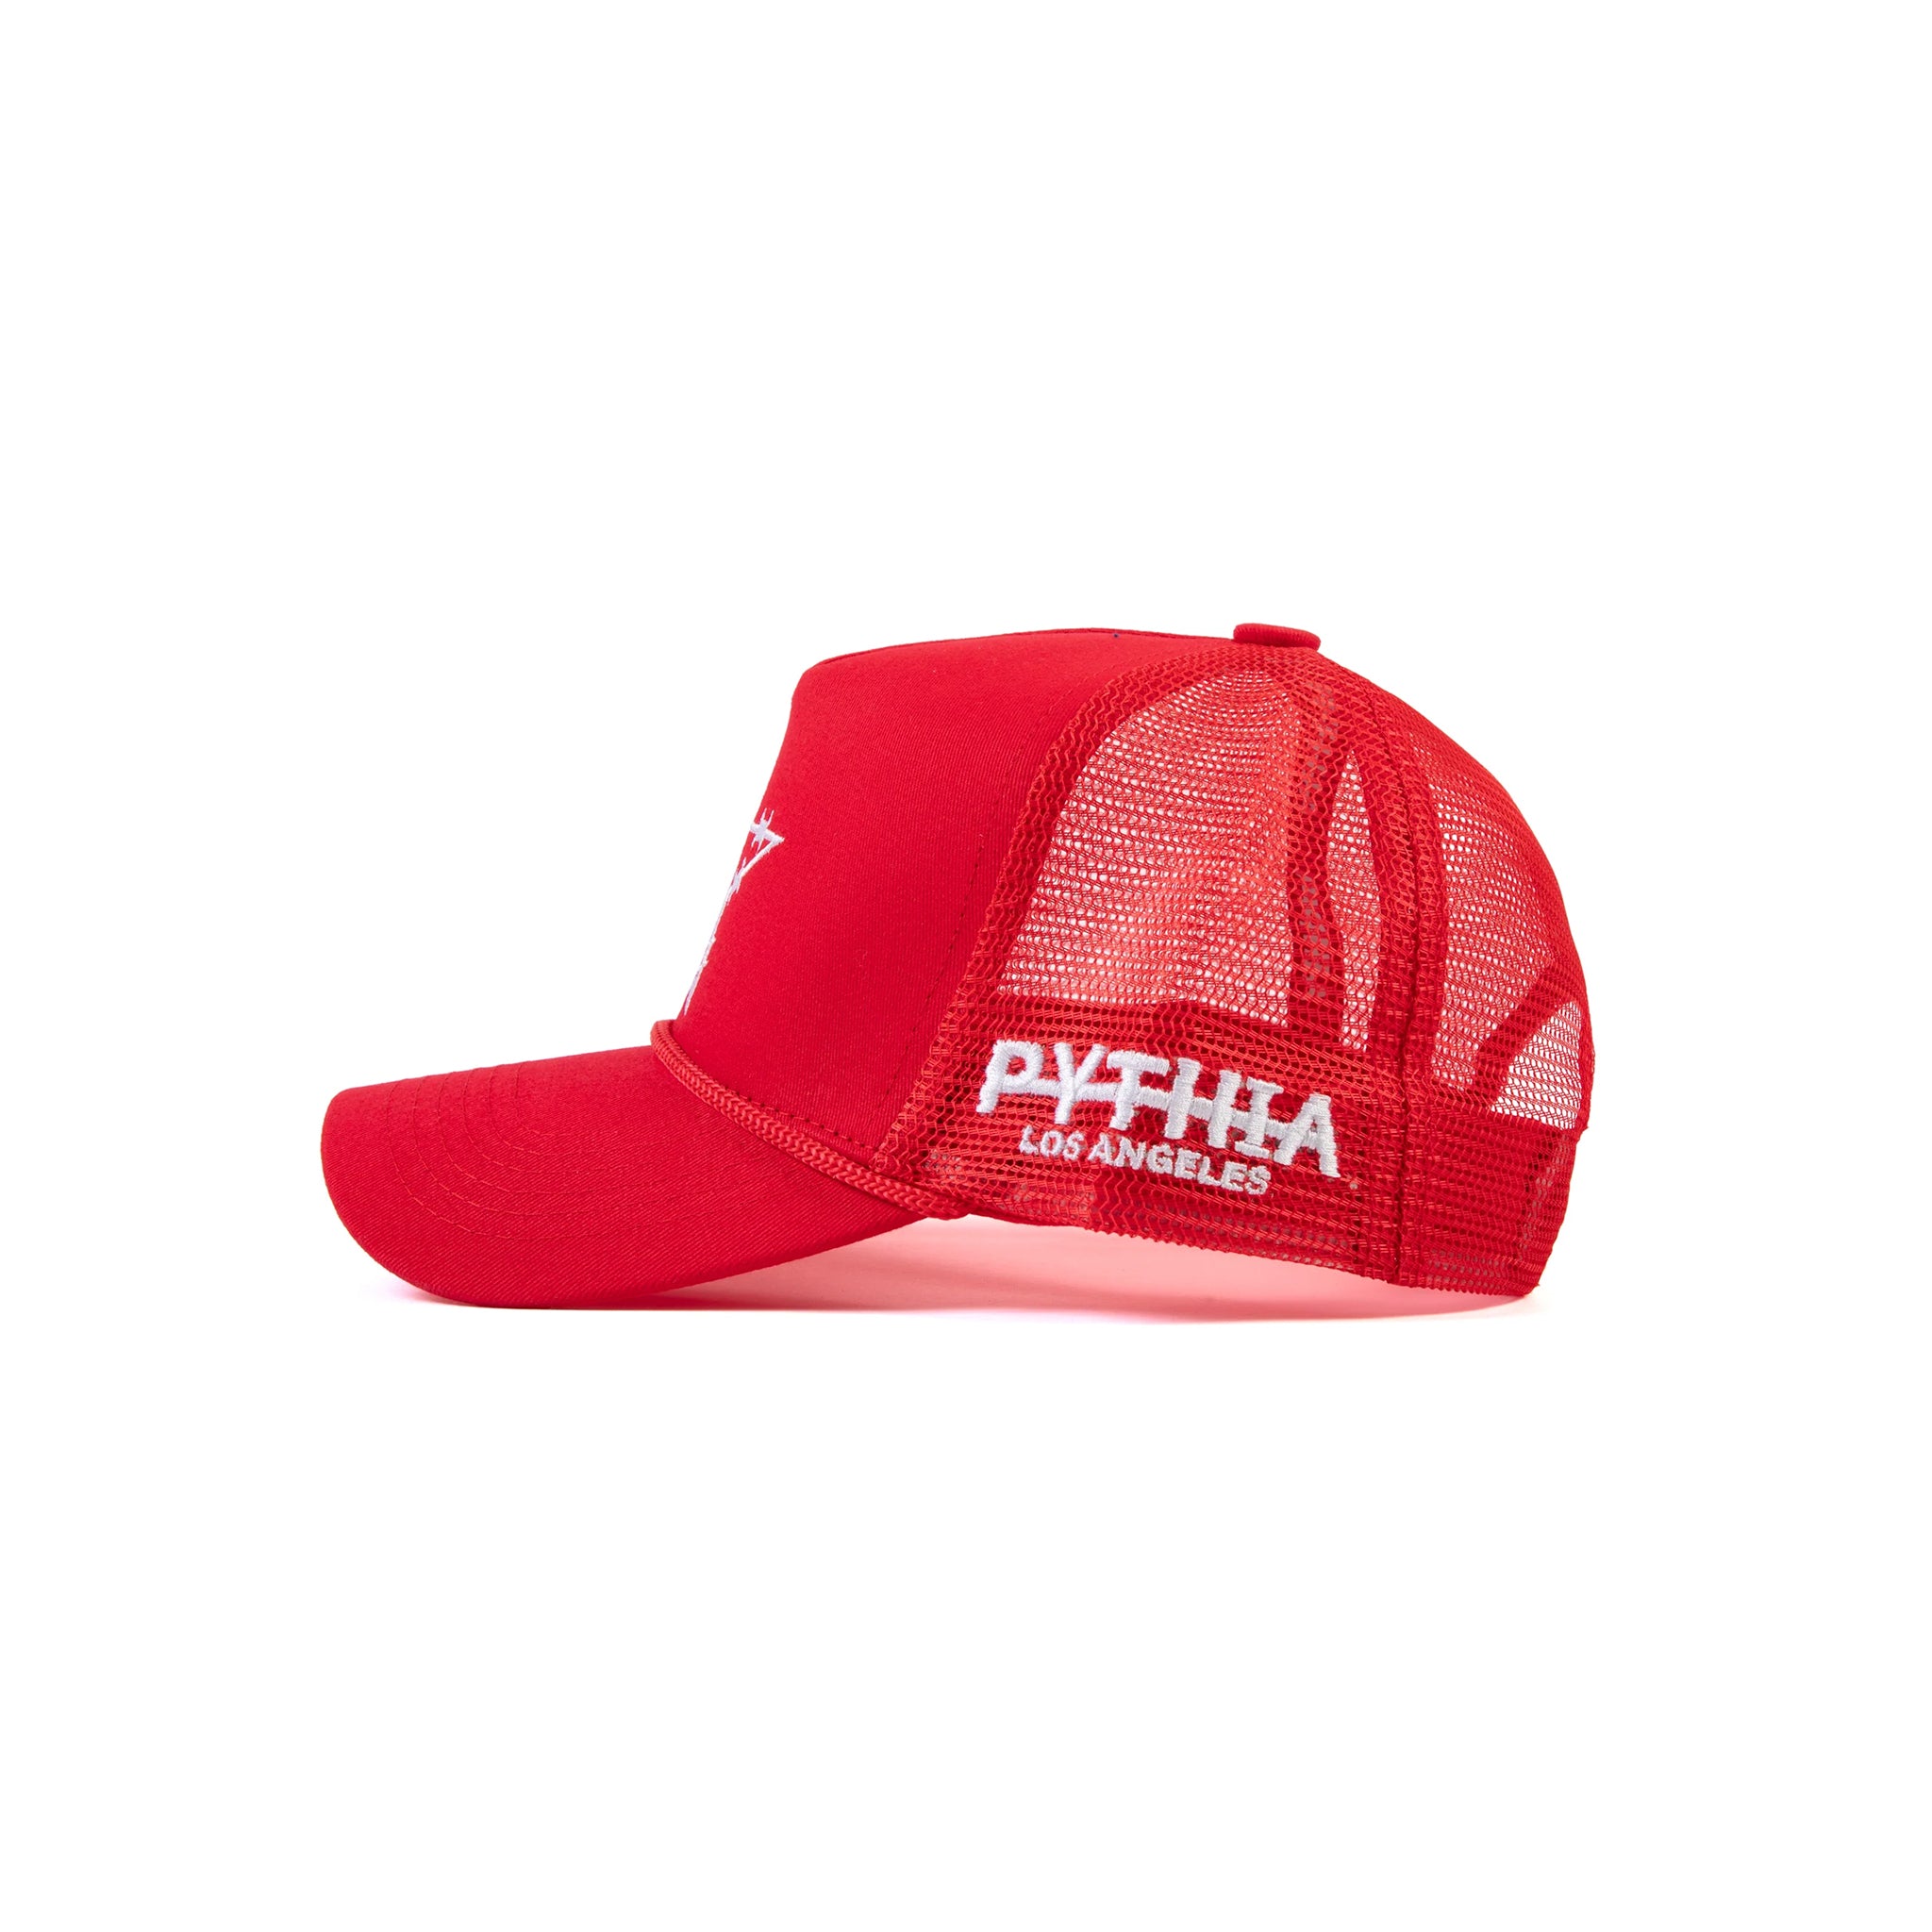 Pythia Barbwire Star Trucker Red Hat